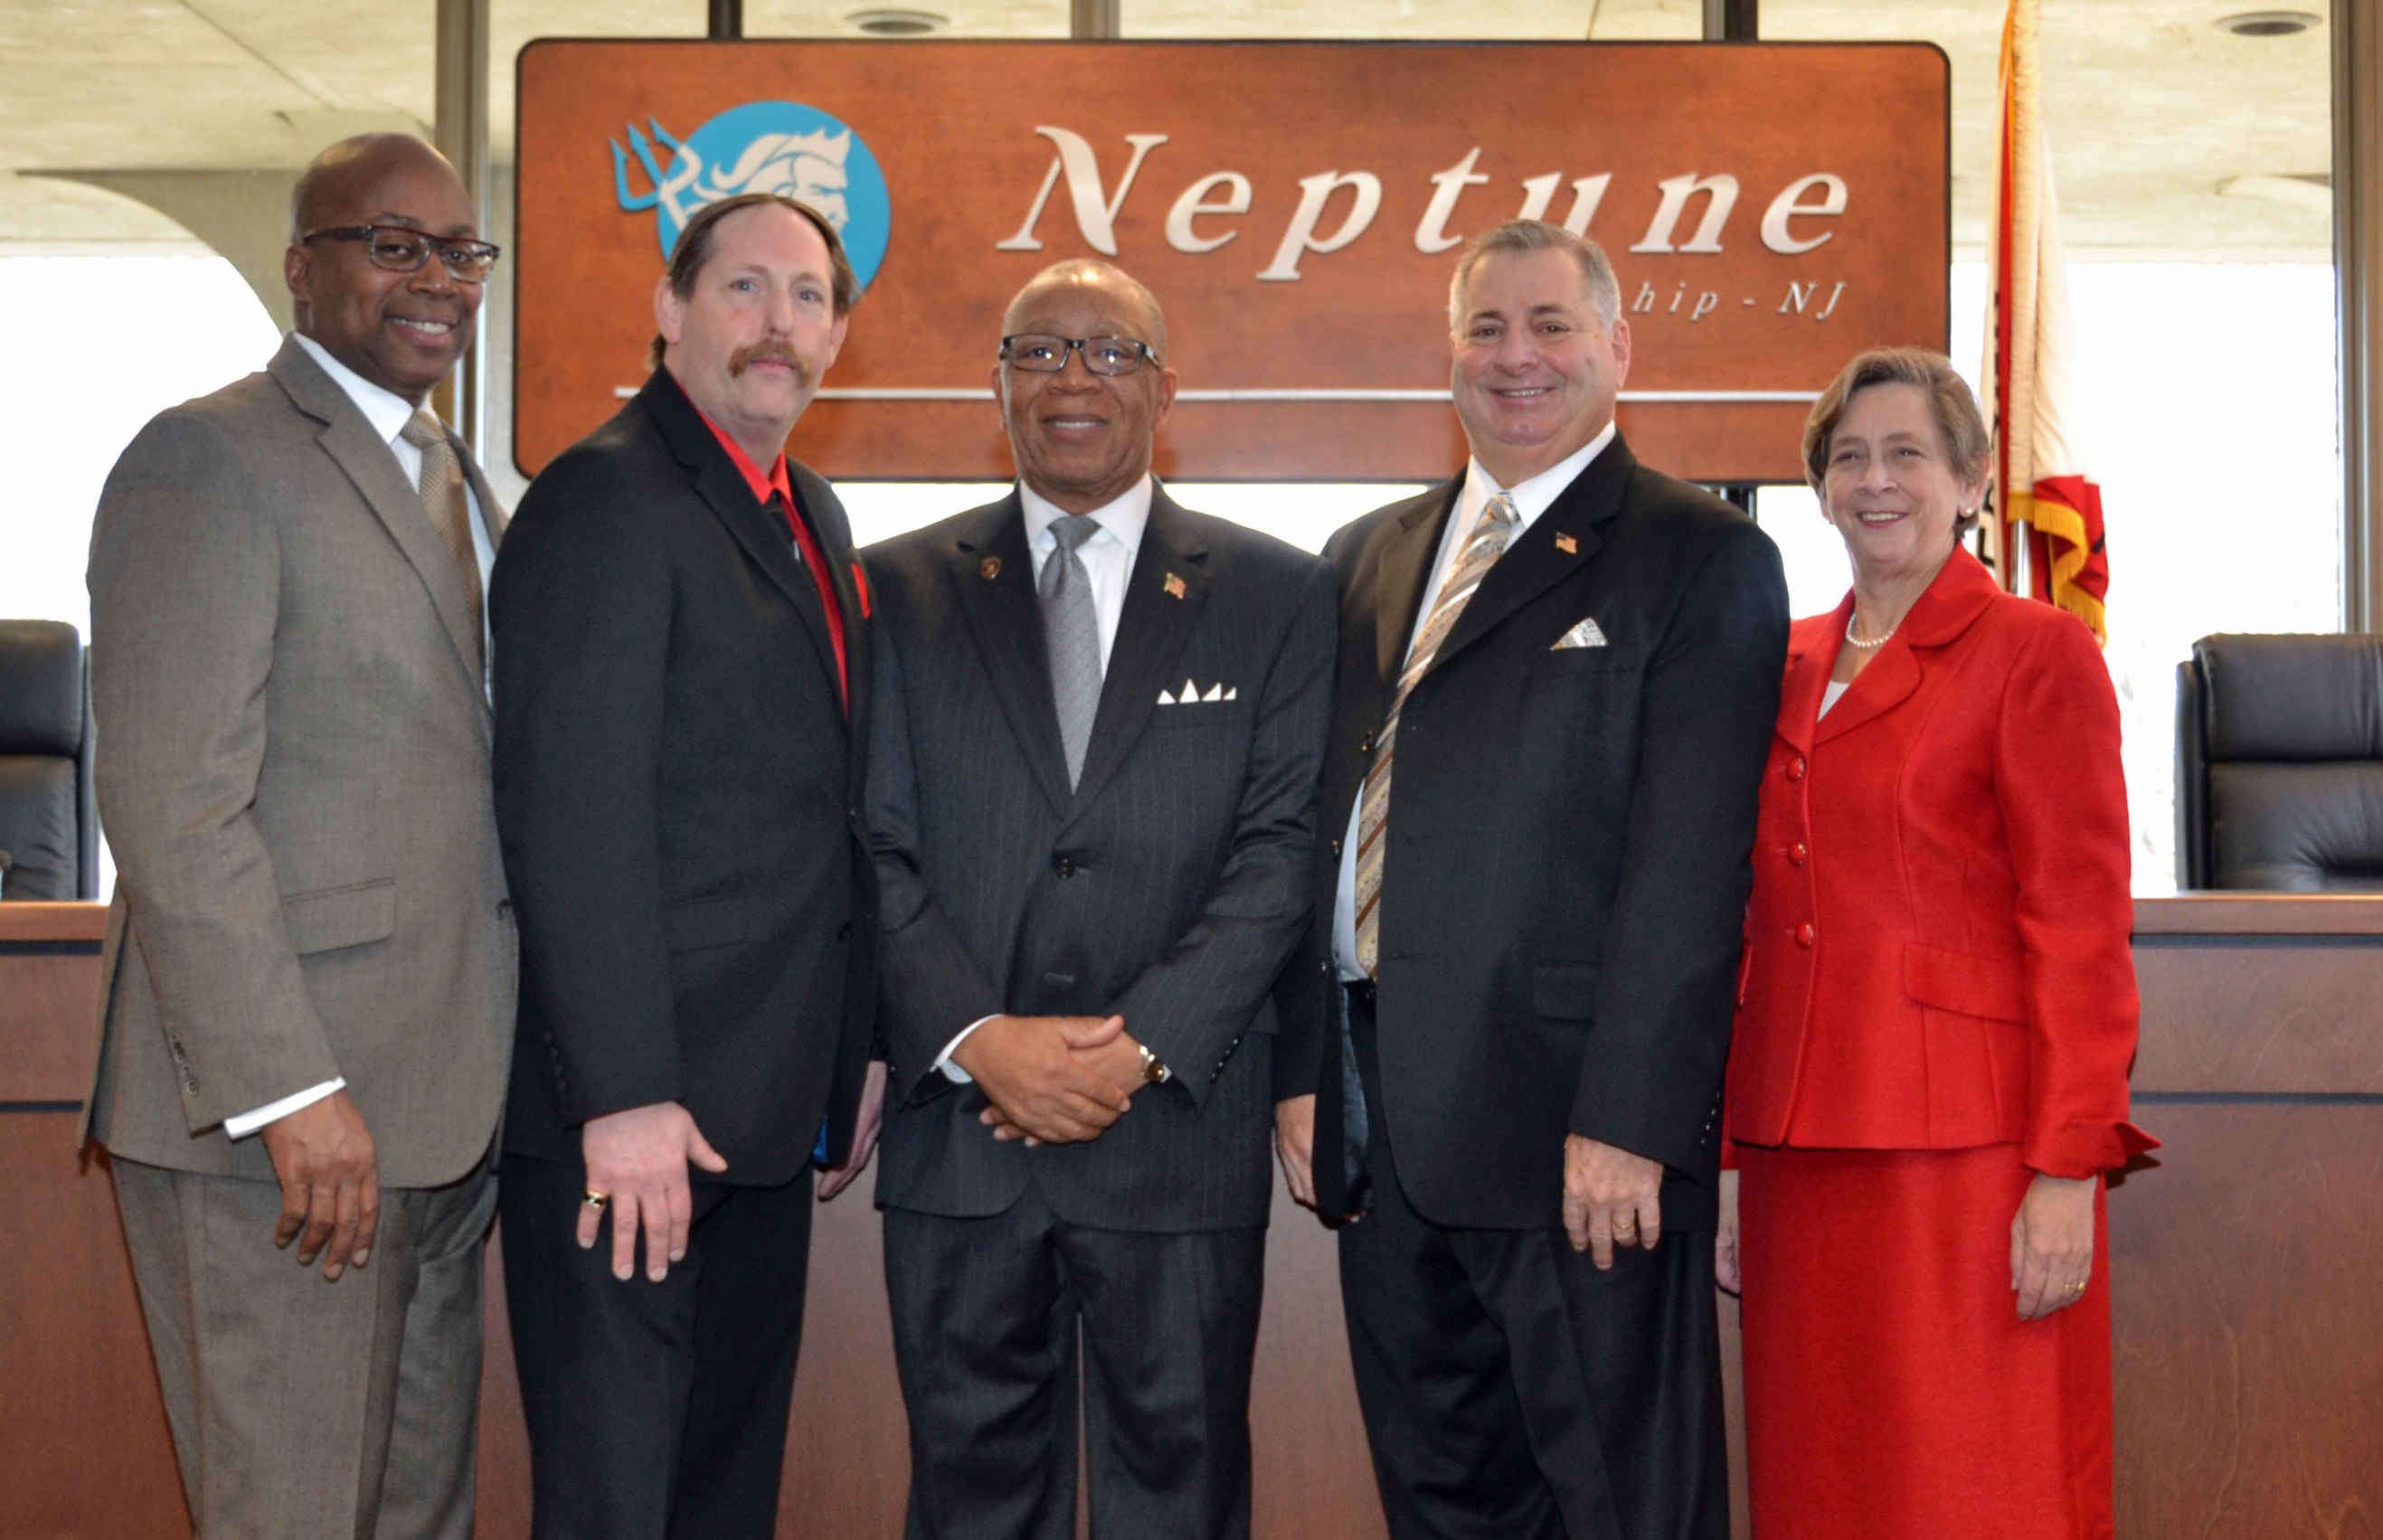 Neptune Township Where Community Business Tourism Prosper